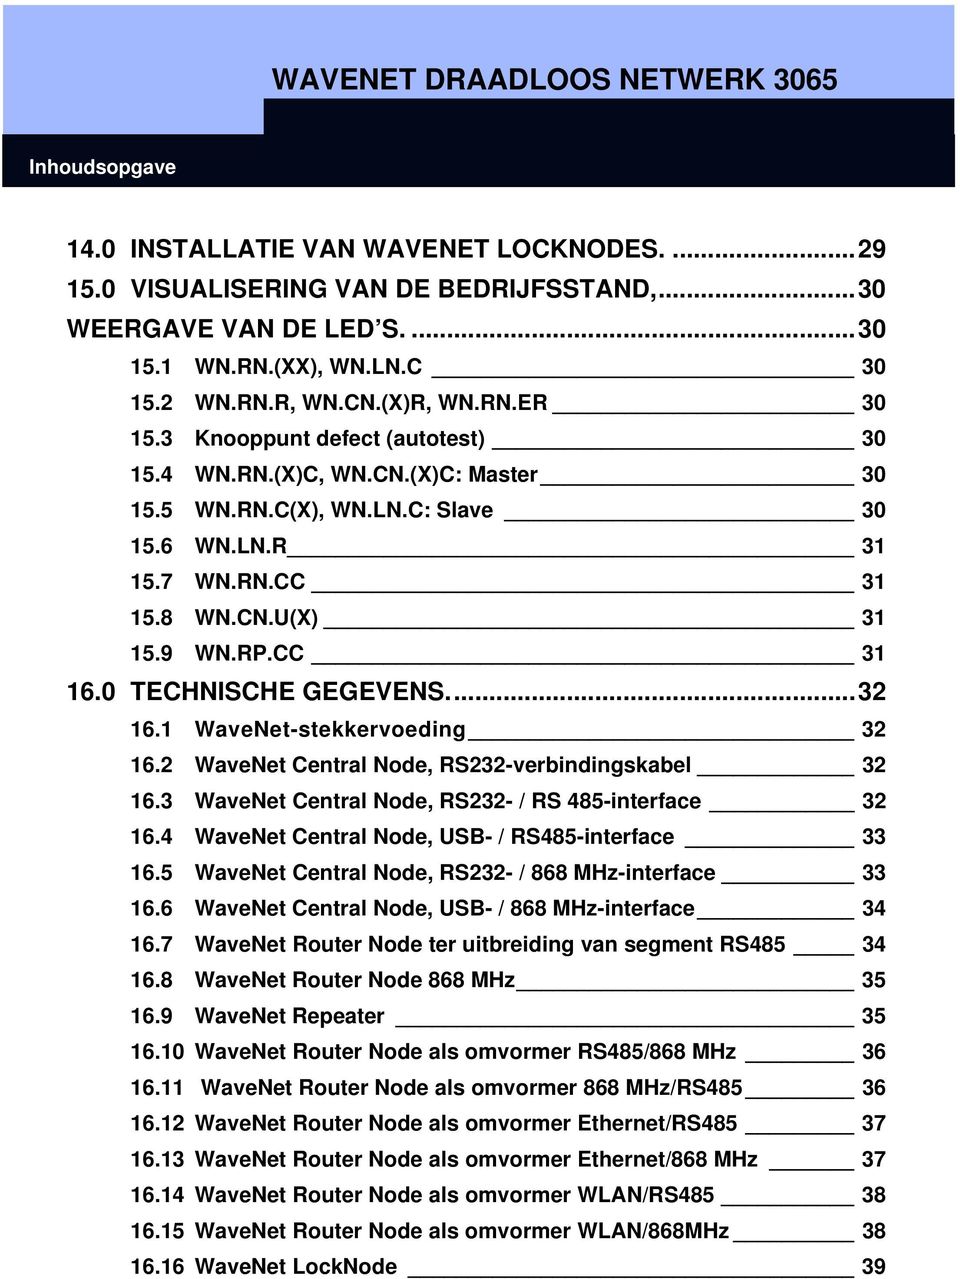 0 TECHNISCHE GEGEVENS...32 16.1 WaveNet-stekkervoeding 32 16.2 WaveNet Central Node, RS232-verbindingskabel 32 16.3 WaveNet Central Node, RS232- / RS 485-interface 32 16.